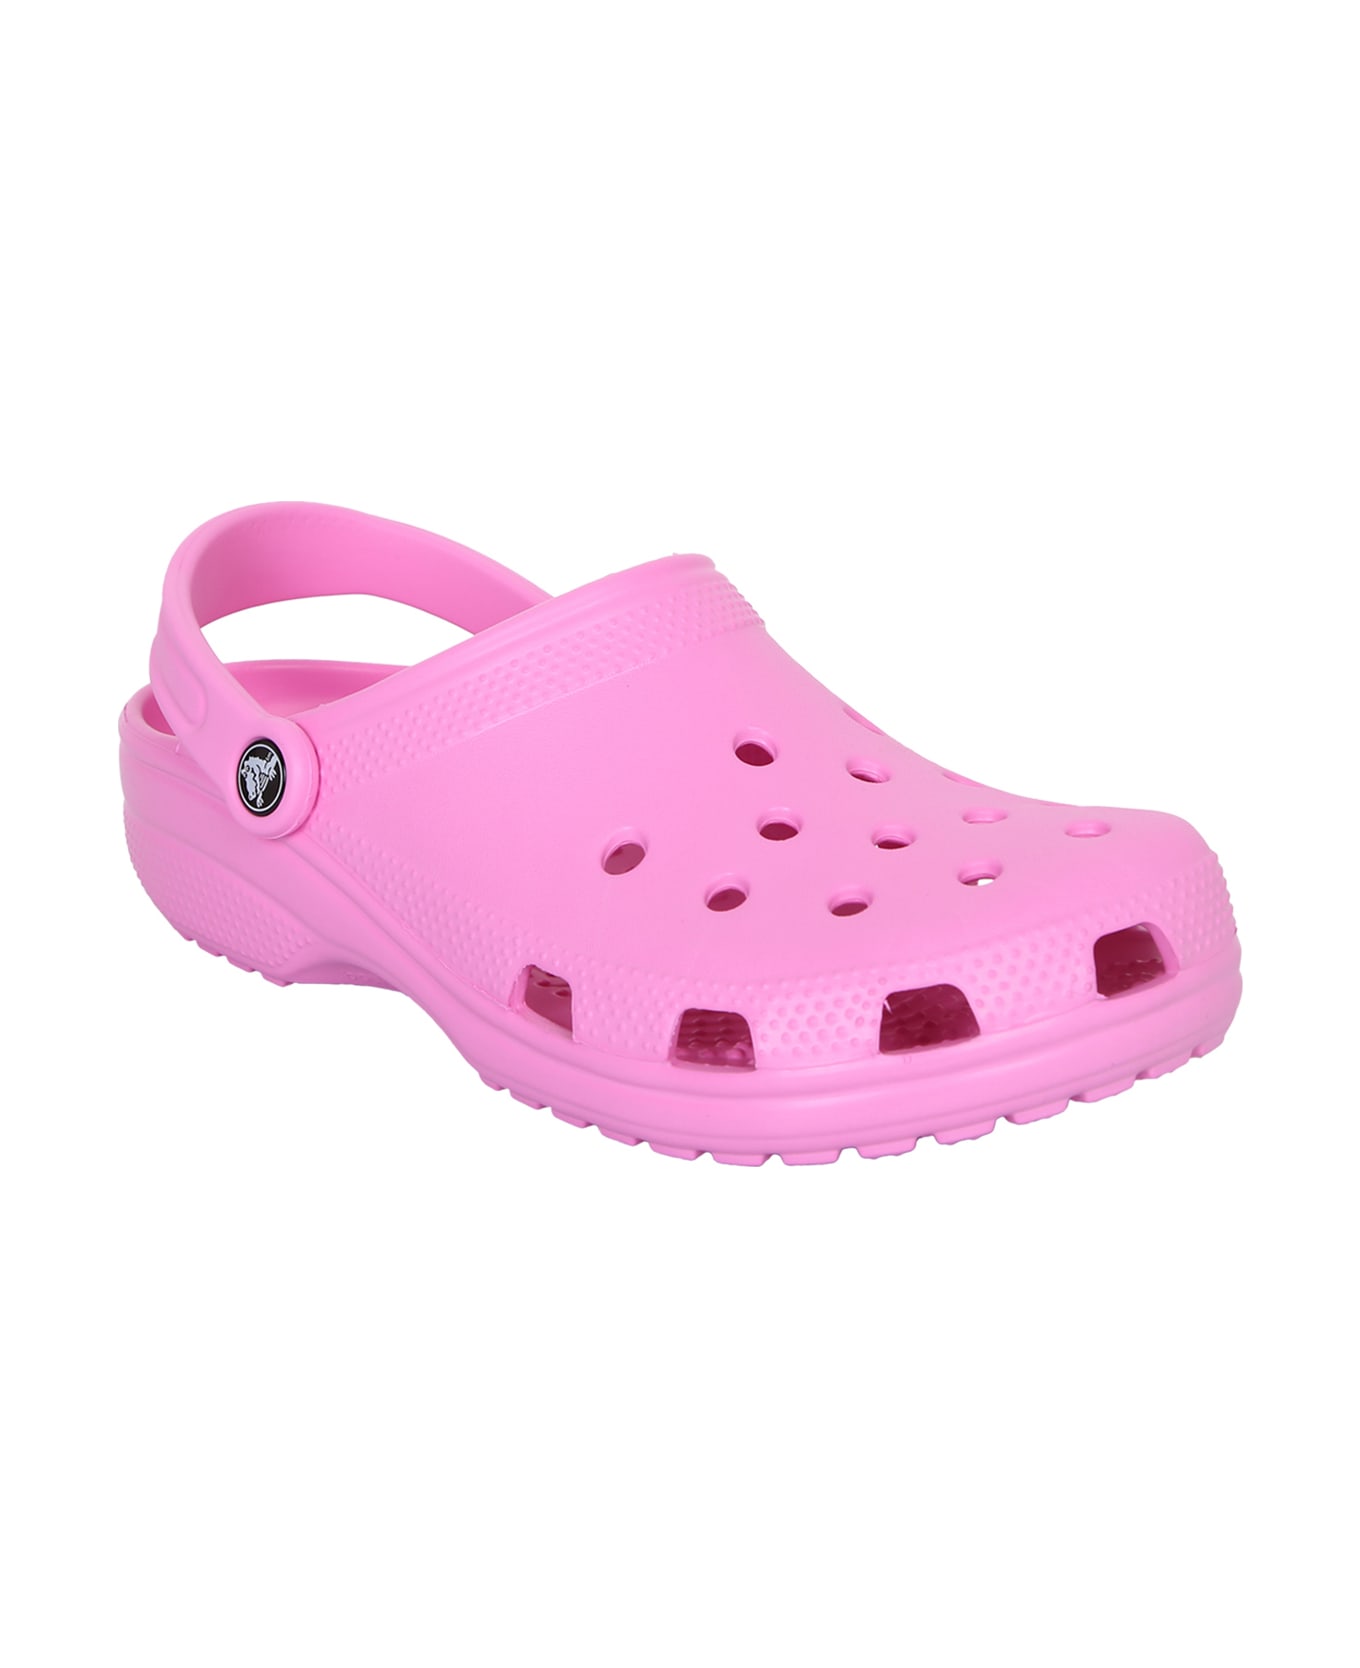 Crocs Cayman Clogs - Pink